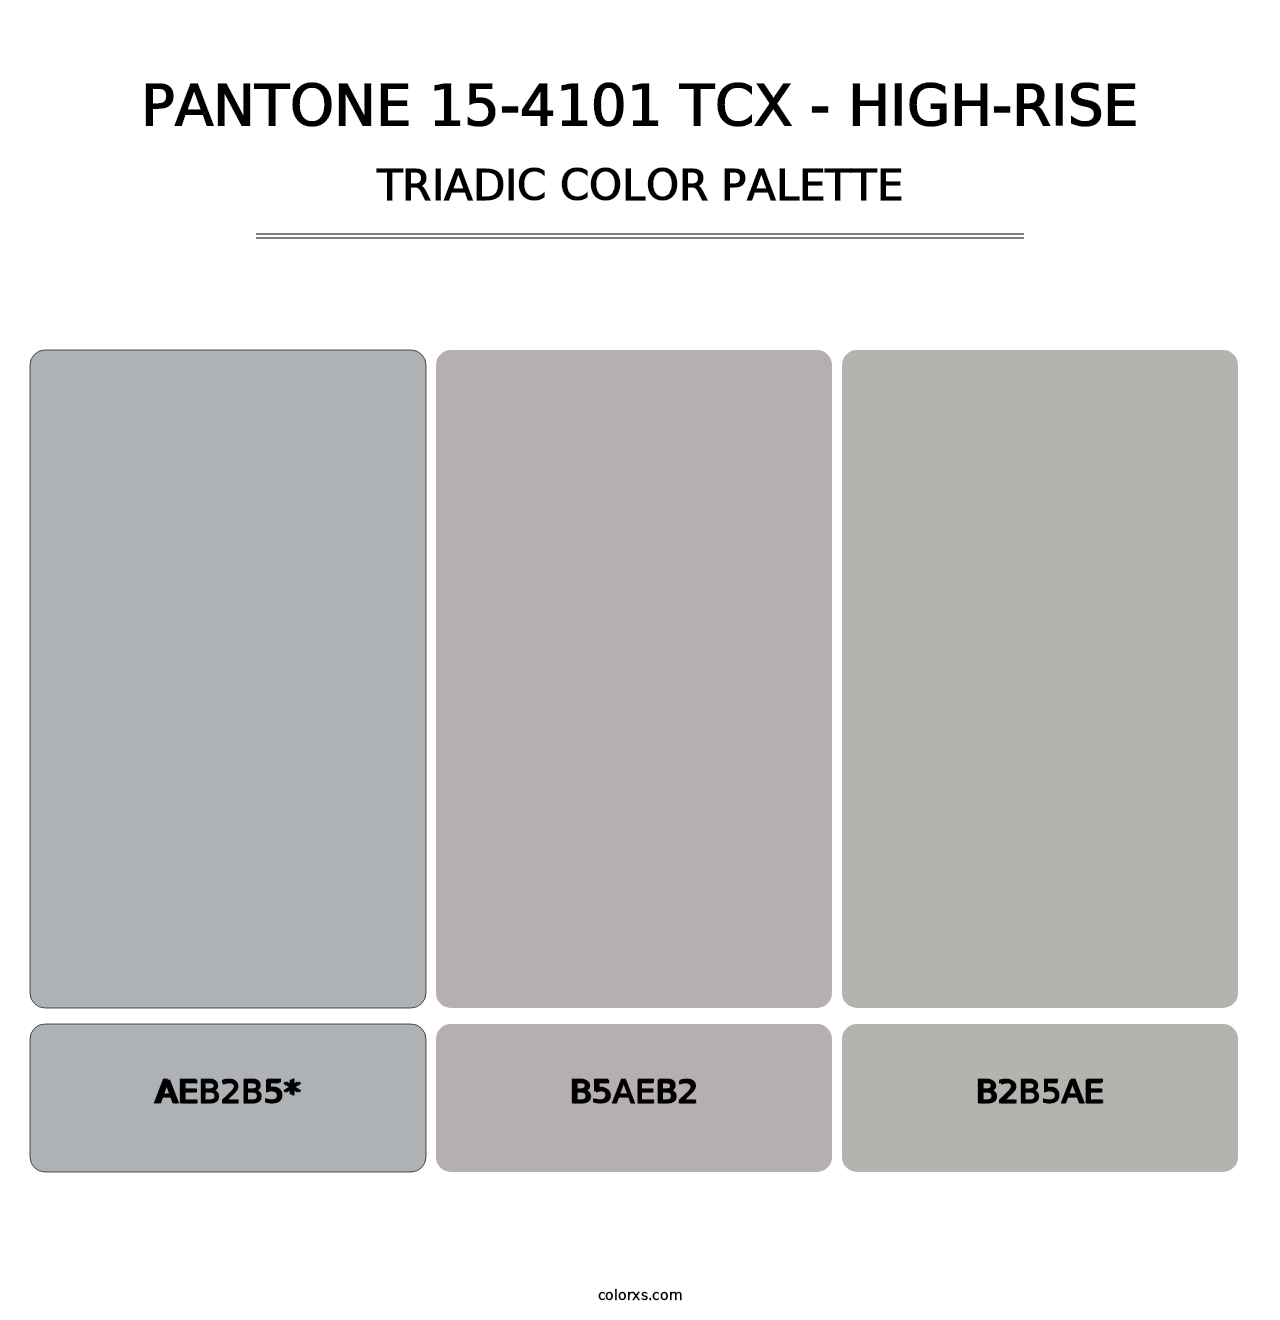 PANTONE 15-4101 TCX - High-rise - Triadic Color Palette